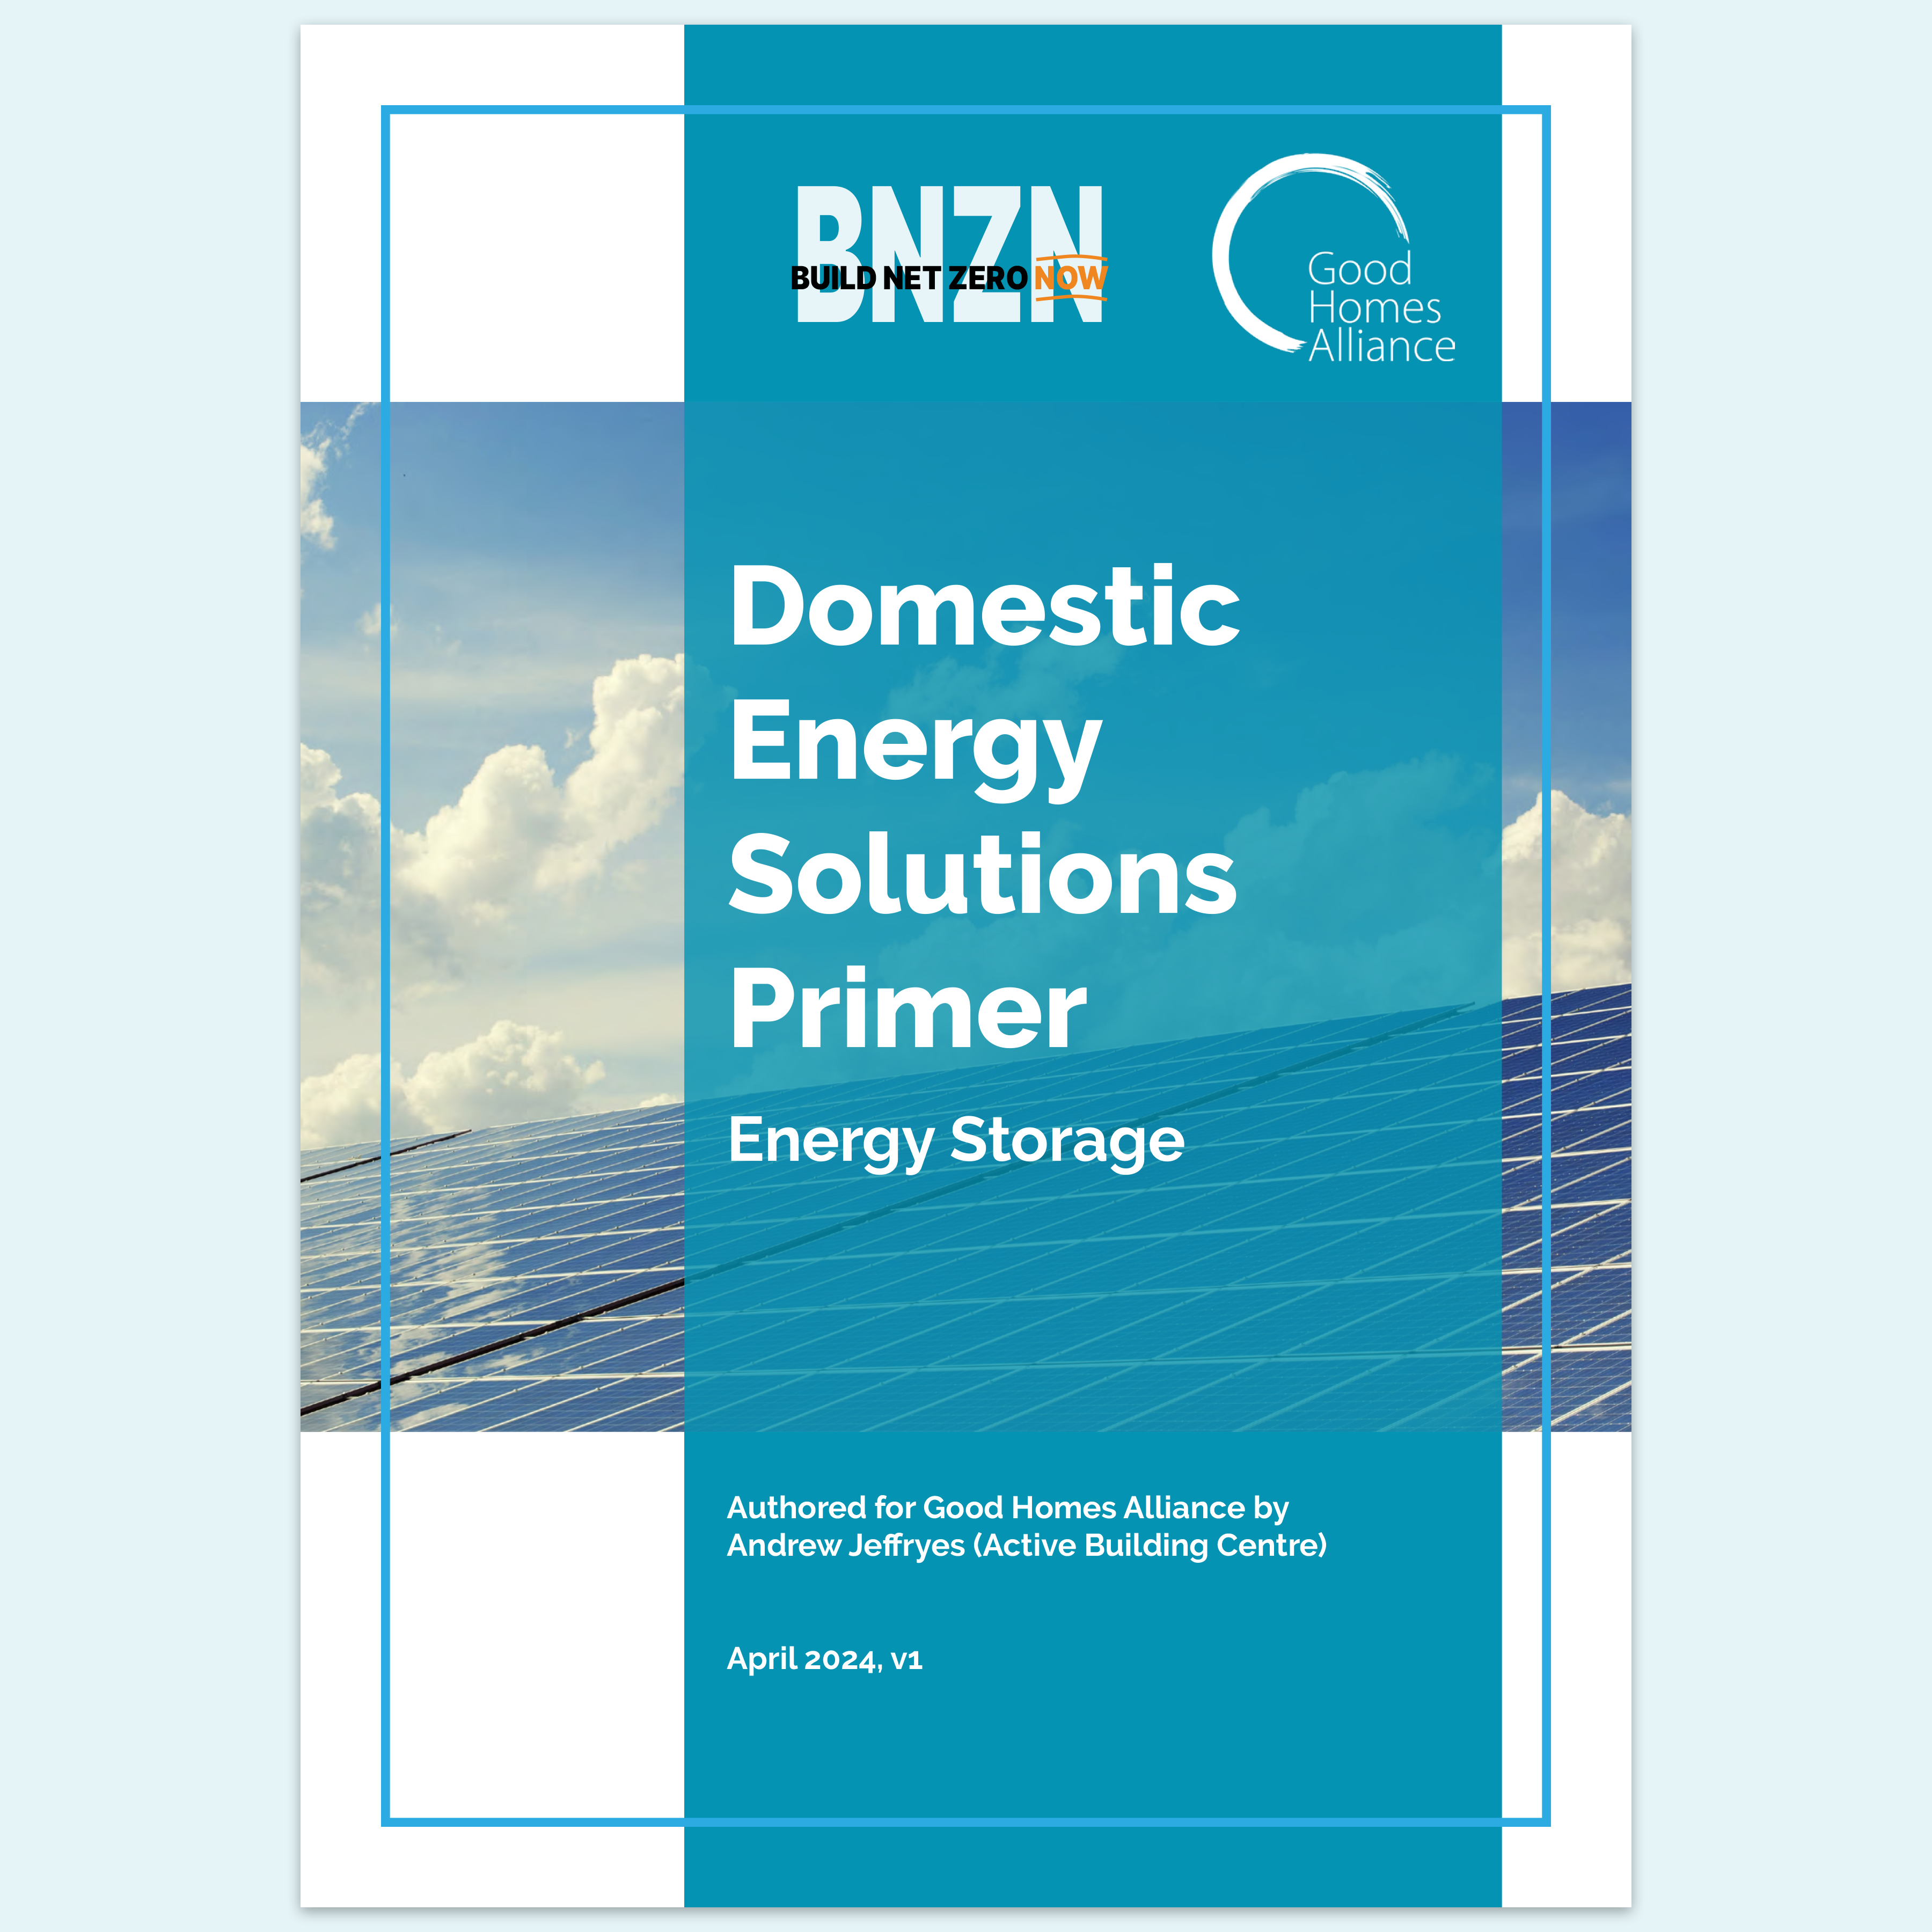 Domestic Energy Solutions Primer - Energy Storage